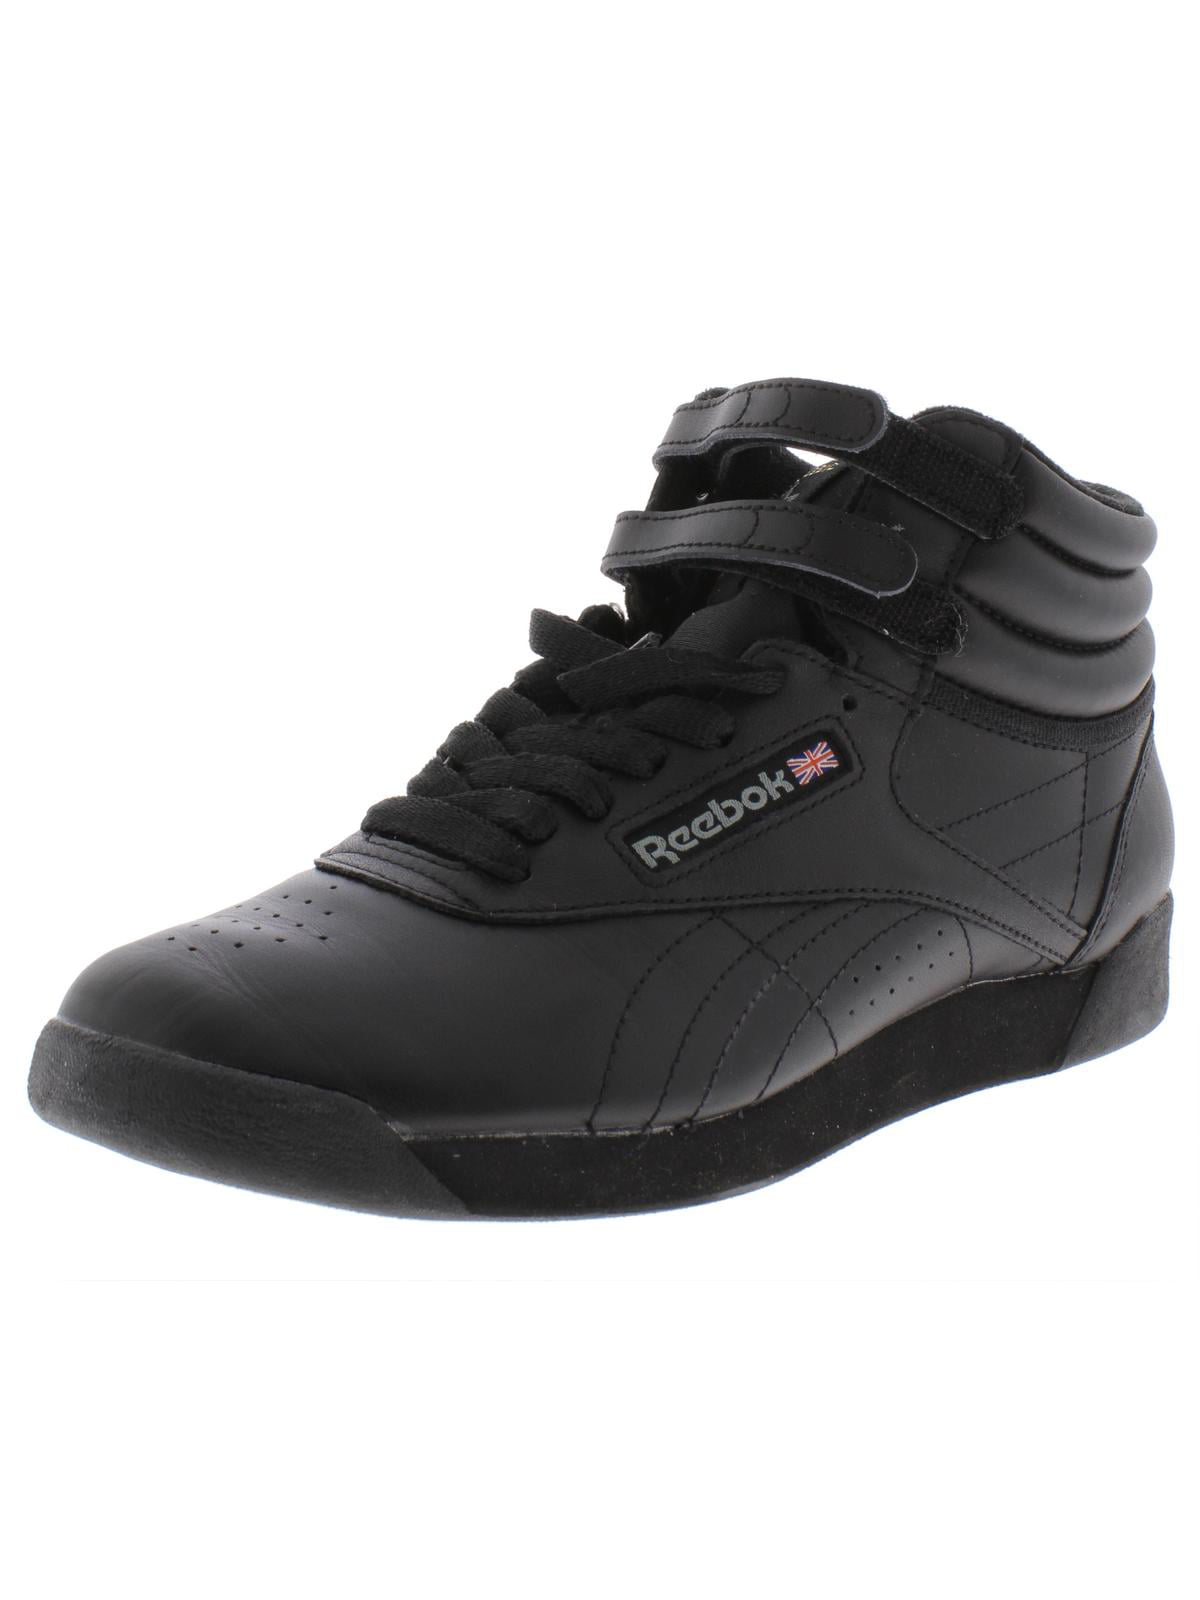 Top Athletic Shoes Black 6 Medium 